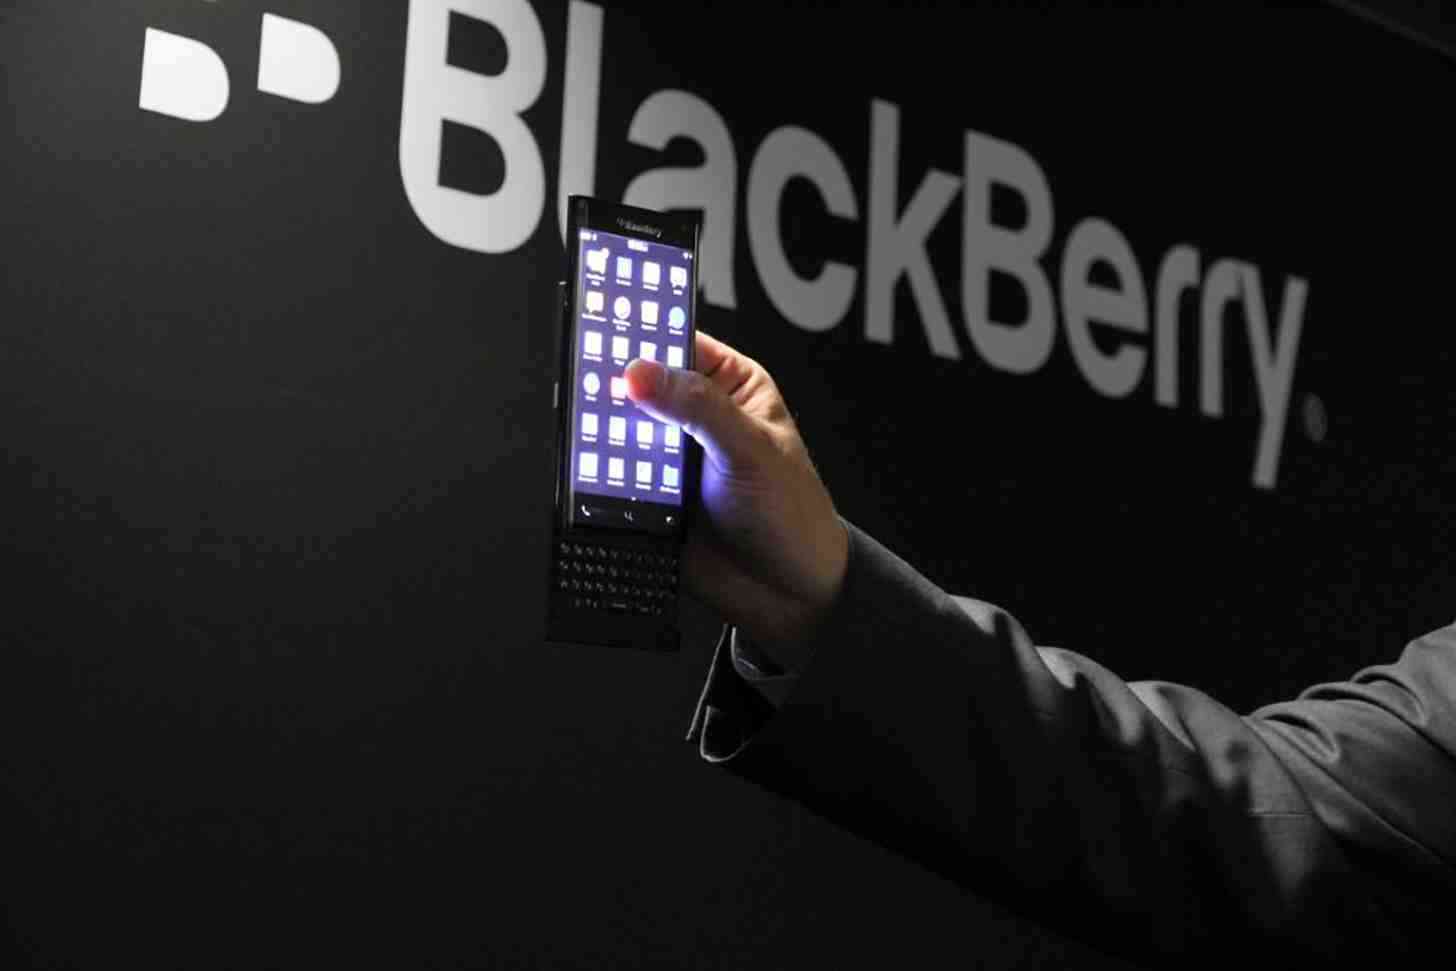 BlackBerry slide-out